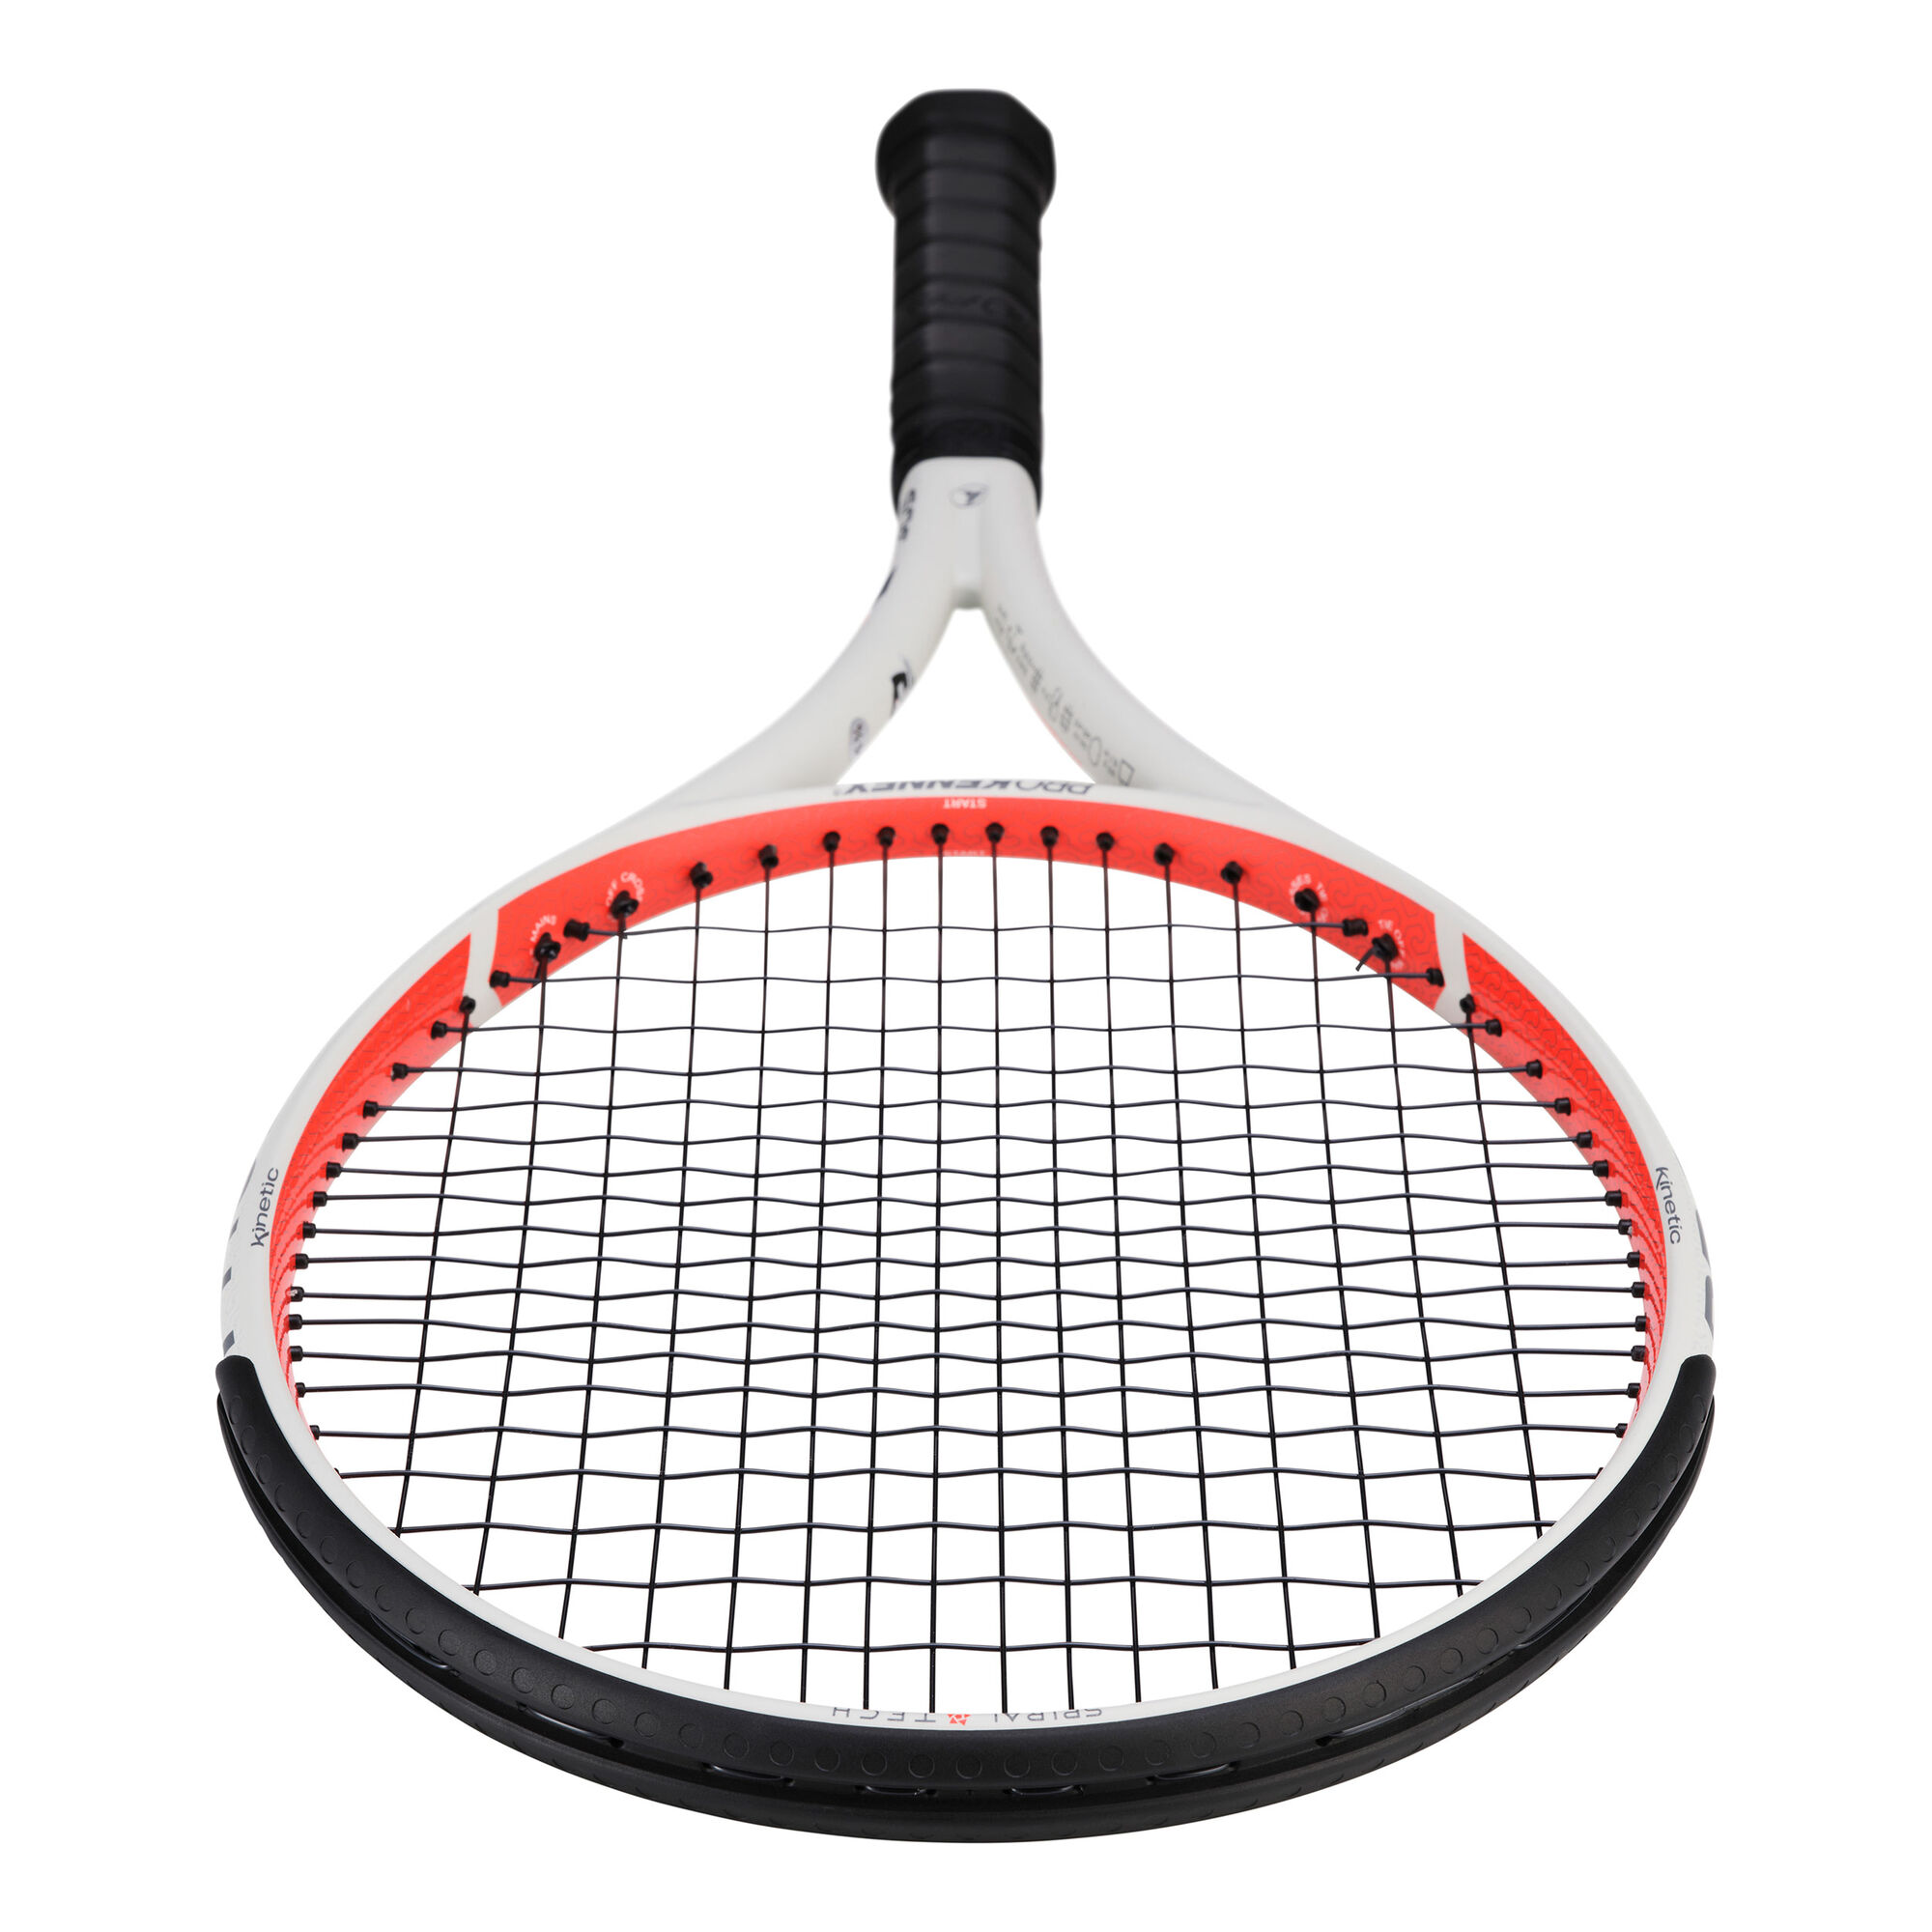 Kinetic PROKENNEX Tennis (305g) Point | 10 online COM Buy